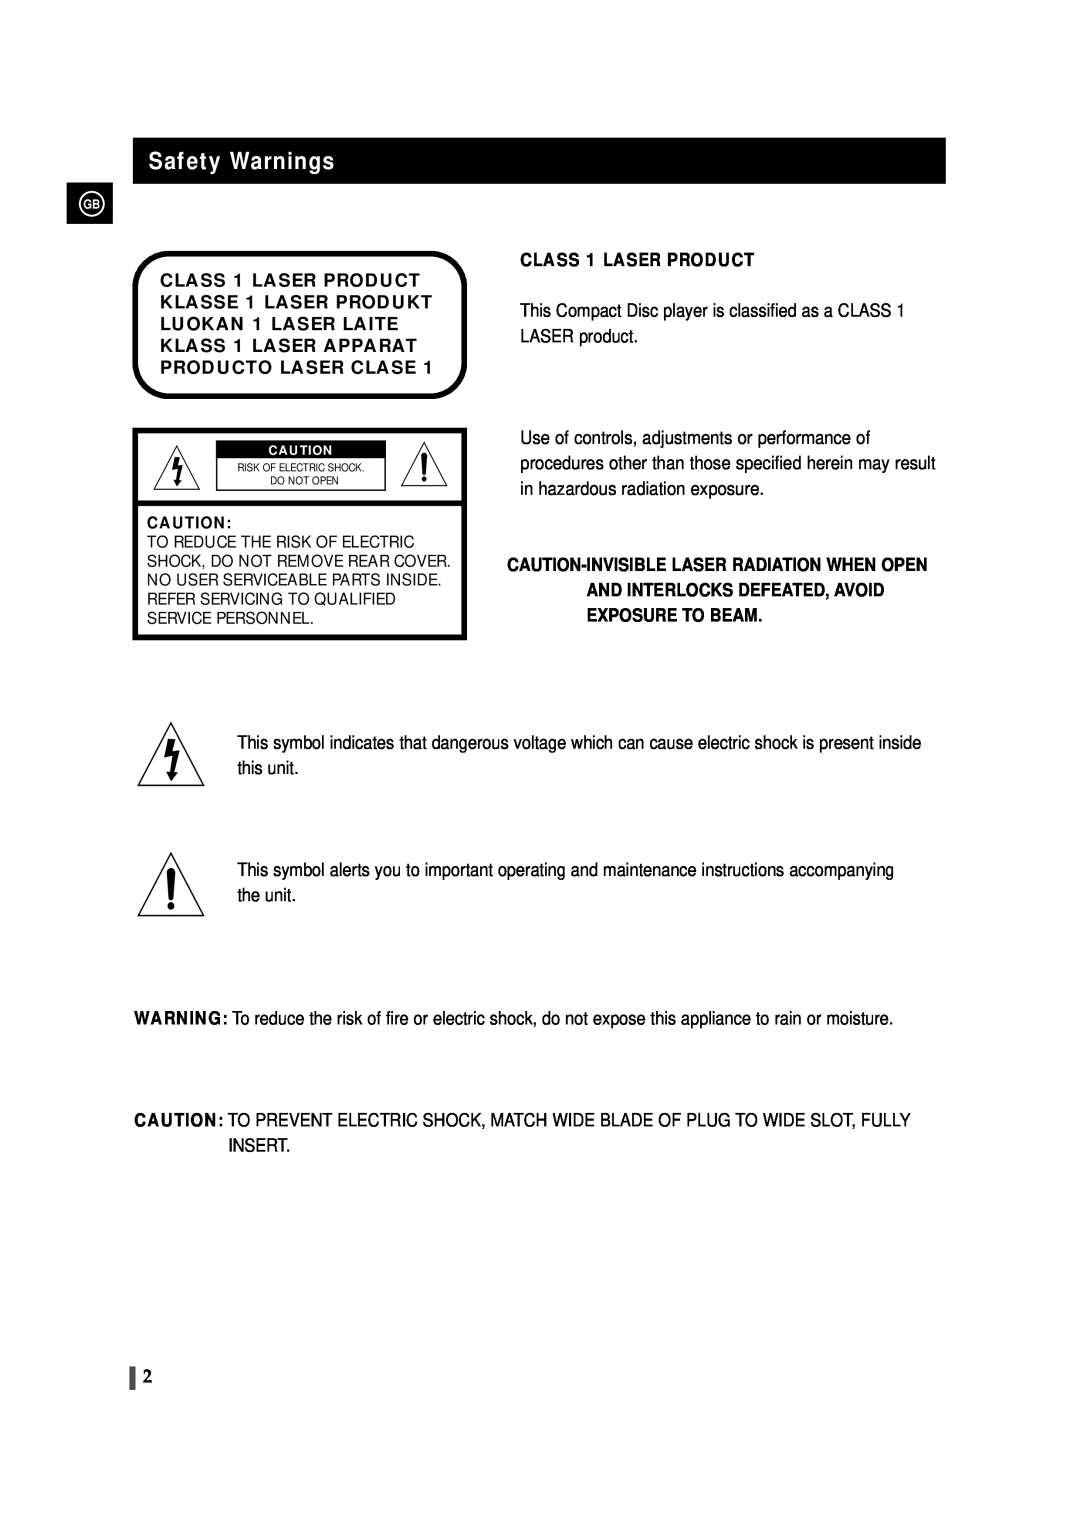 Samsung MAX-VS530 instruction manual Safety Warnings, CLASS 1 LASER PRODUCT KLASSE 1 LASER PRODUKT, Producto Laser Clase 